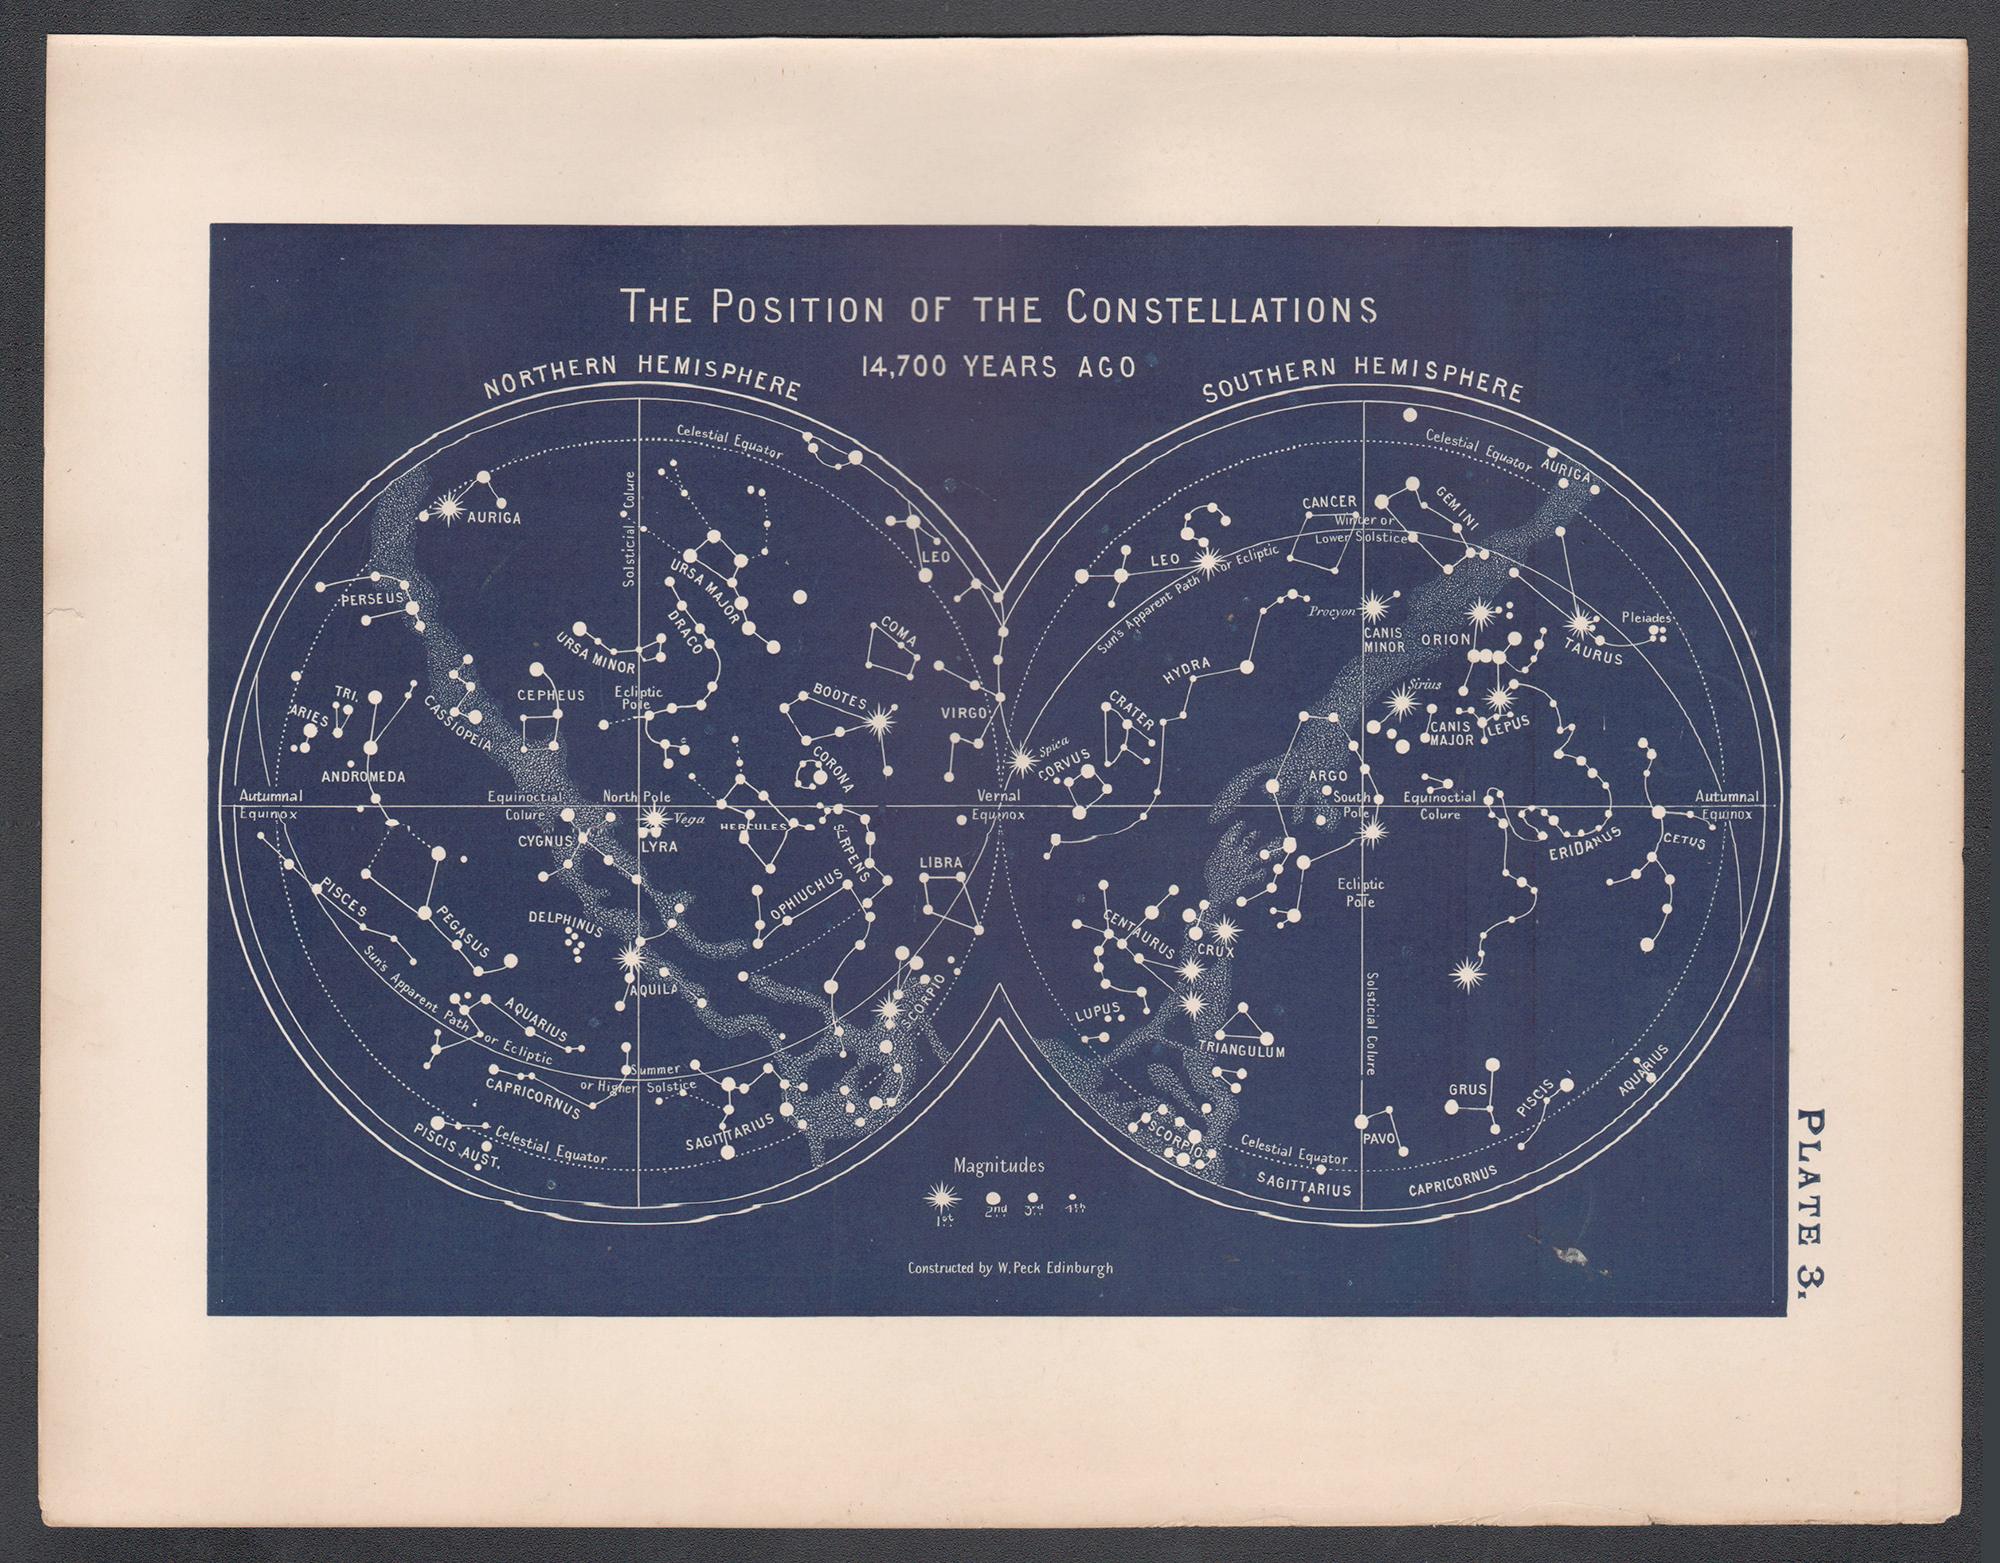 The Position of the Constellations. Antikes Astronomenisches Diagramm – Print von William Peck